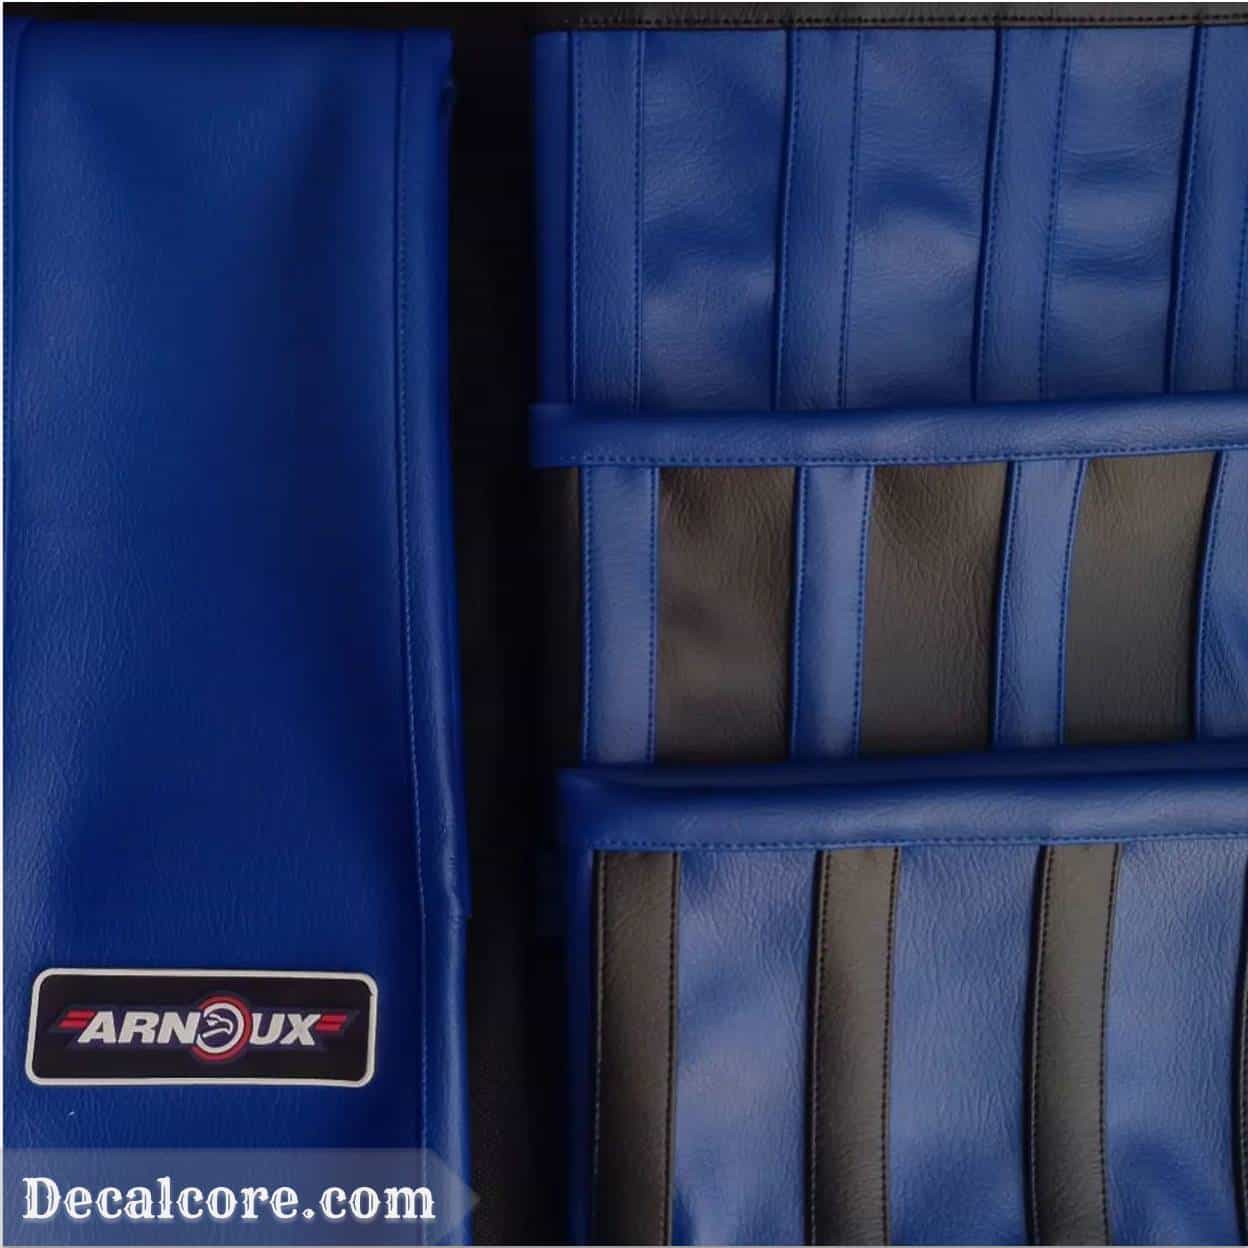 Arnoux blue 3